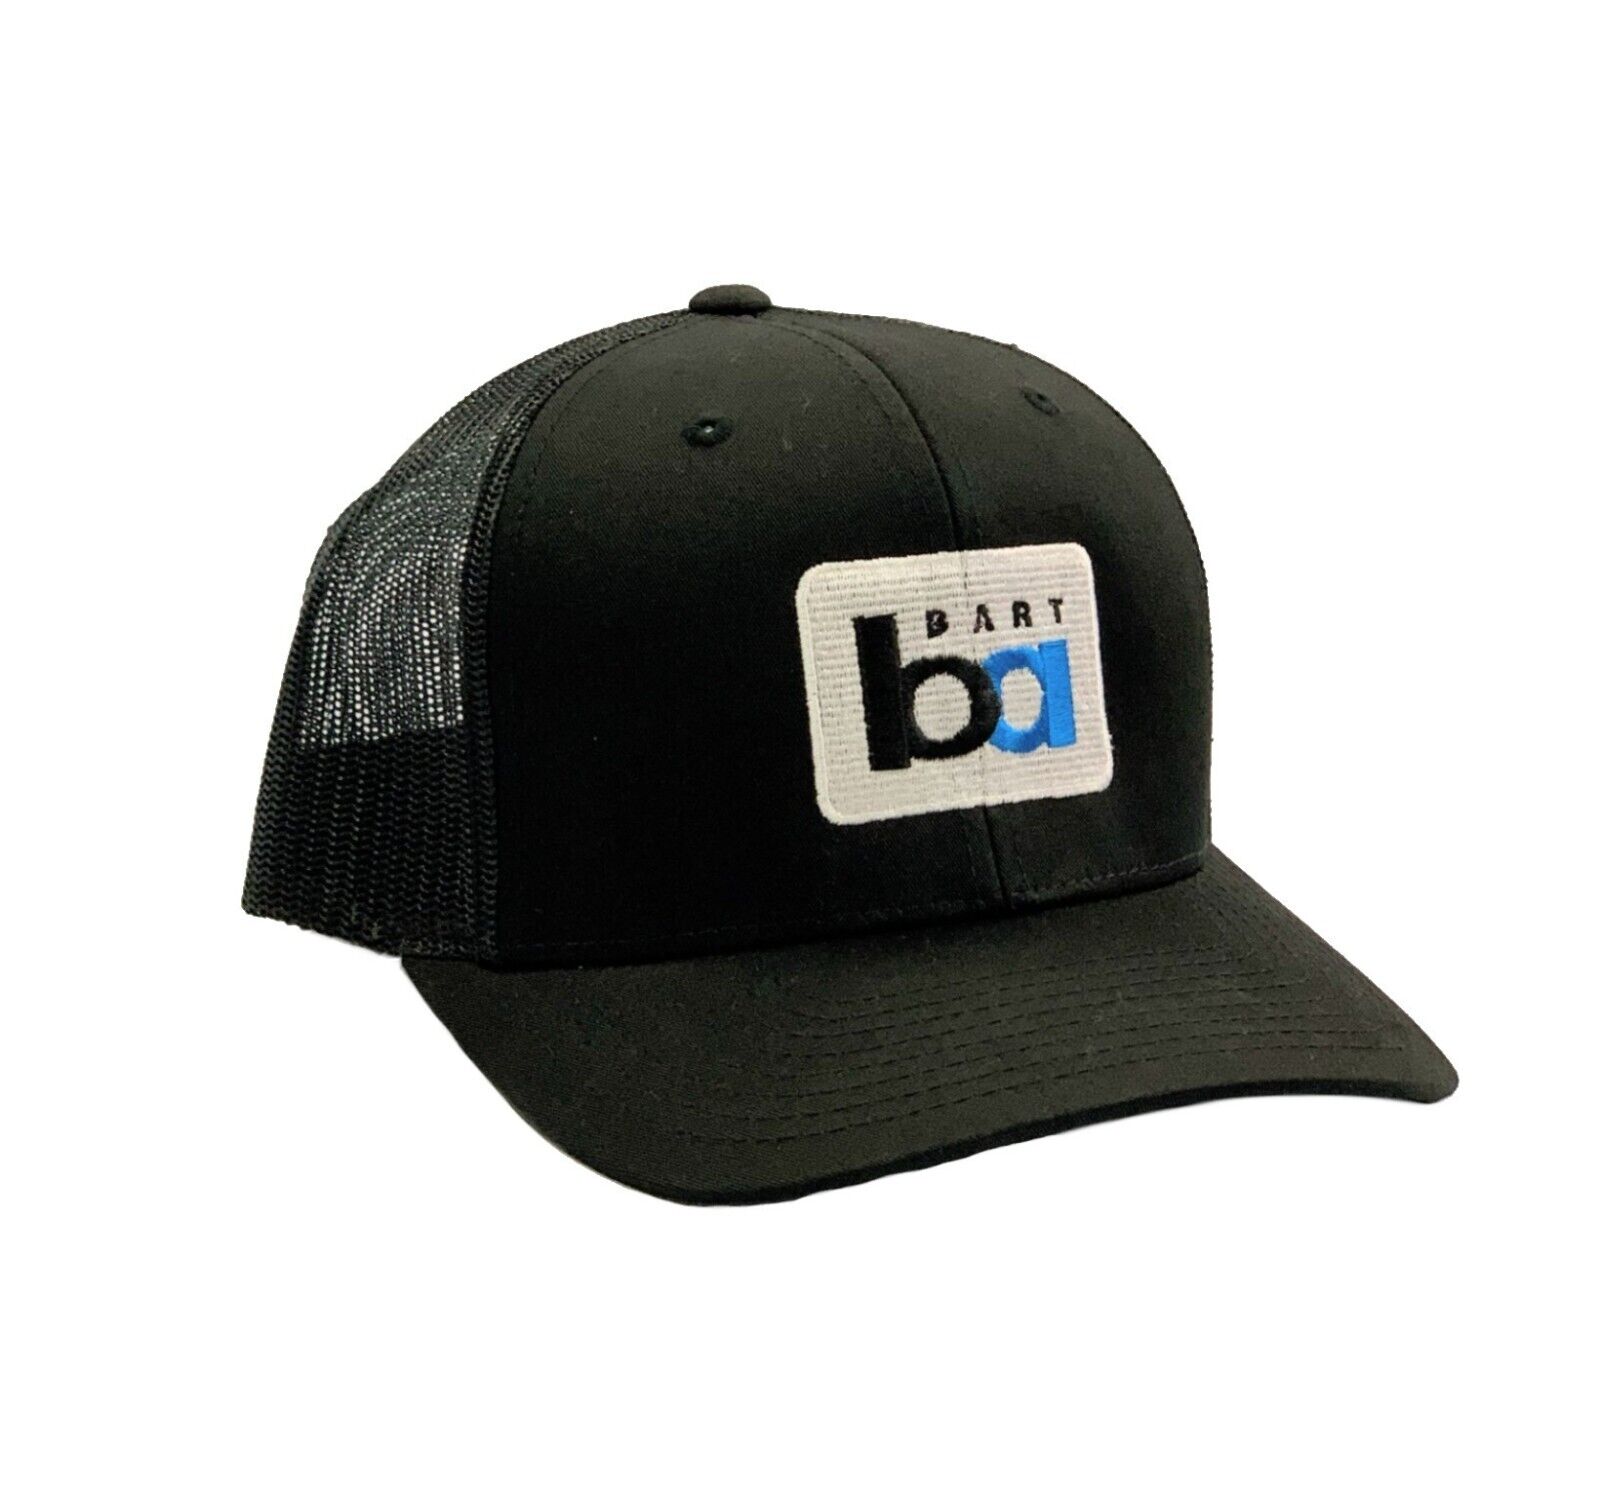 BART (Bay Area Rapid Transit) Snapback Trucker Cap Hat